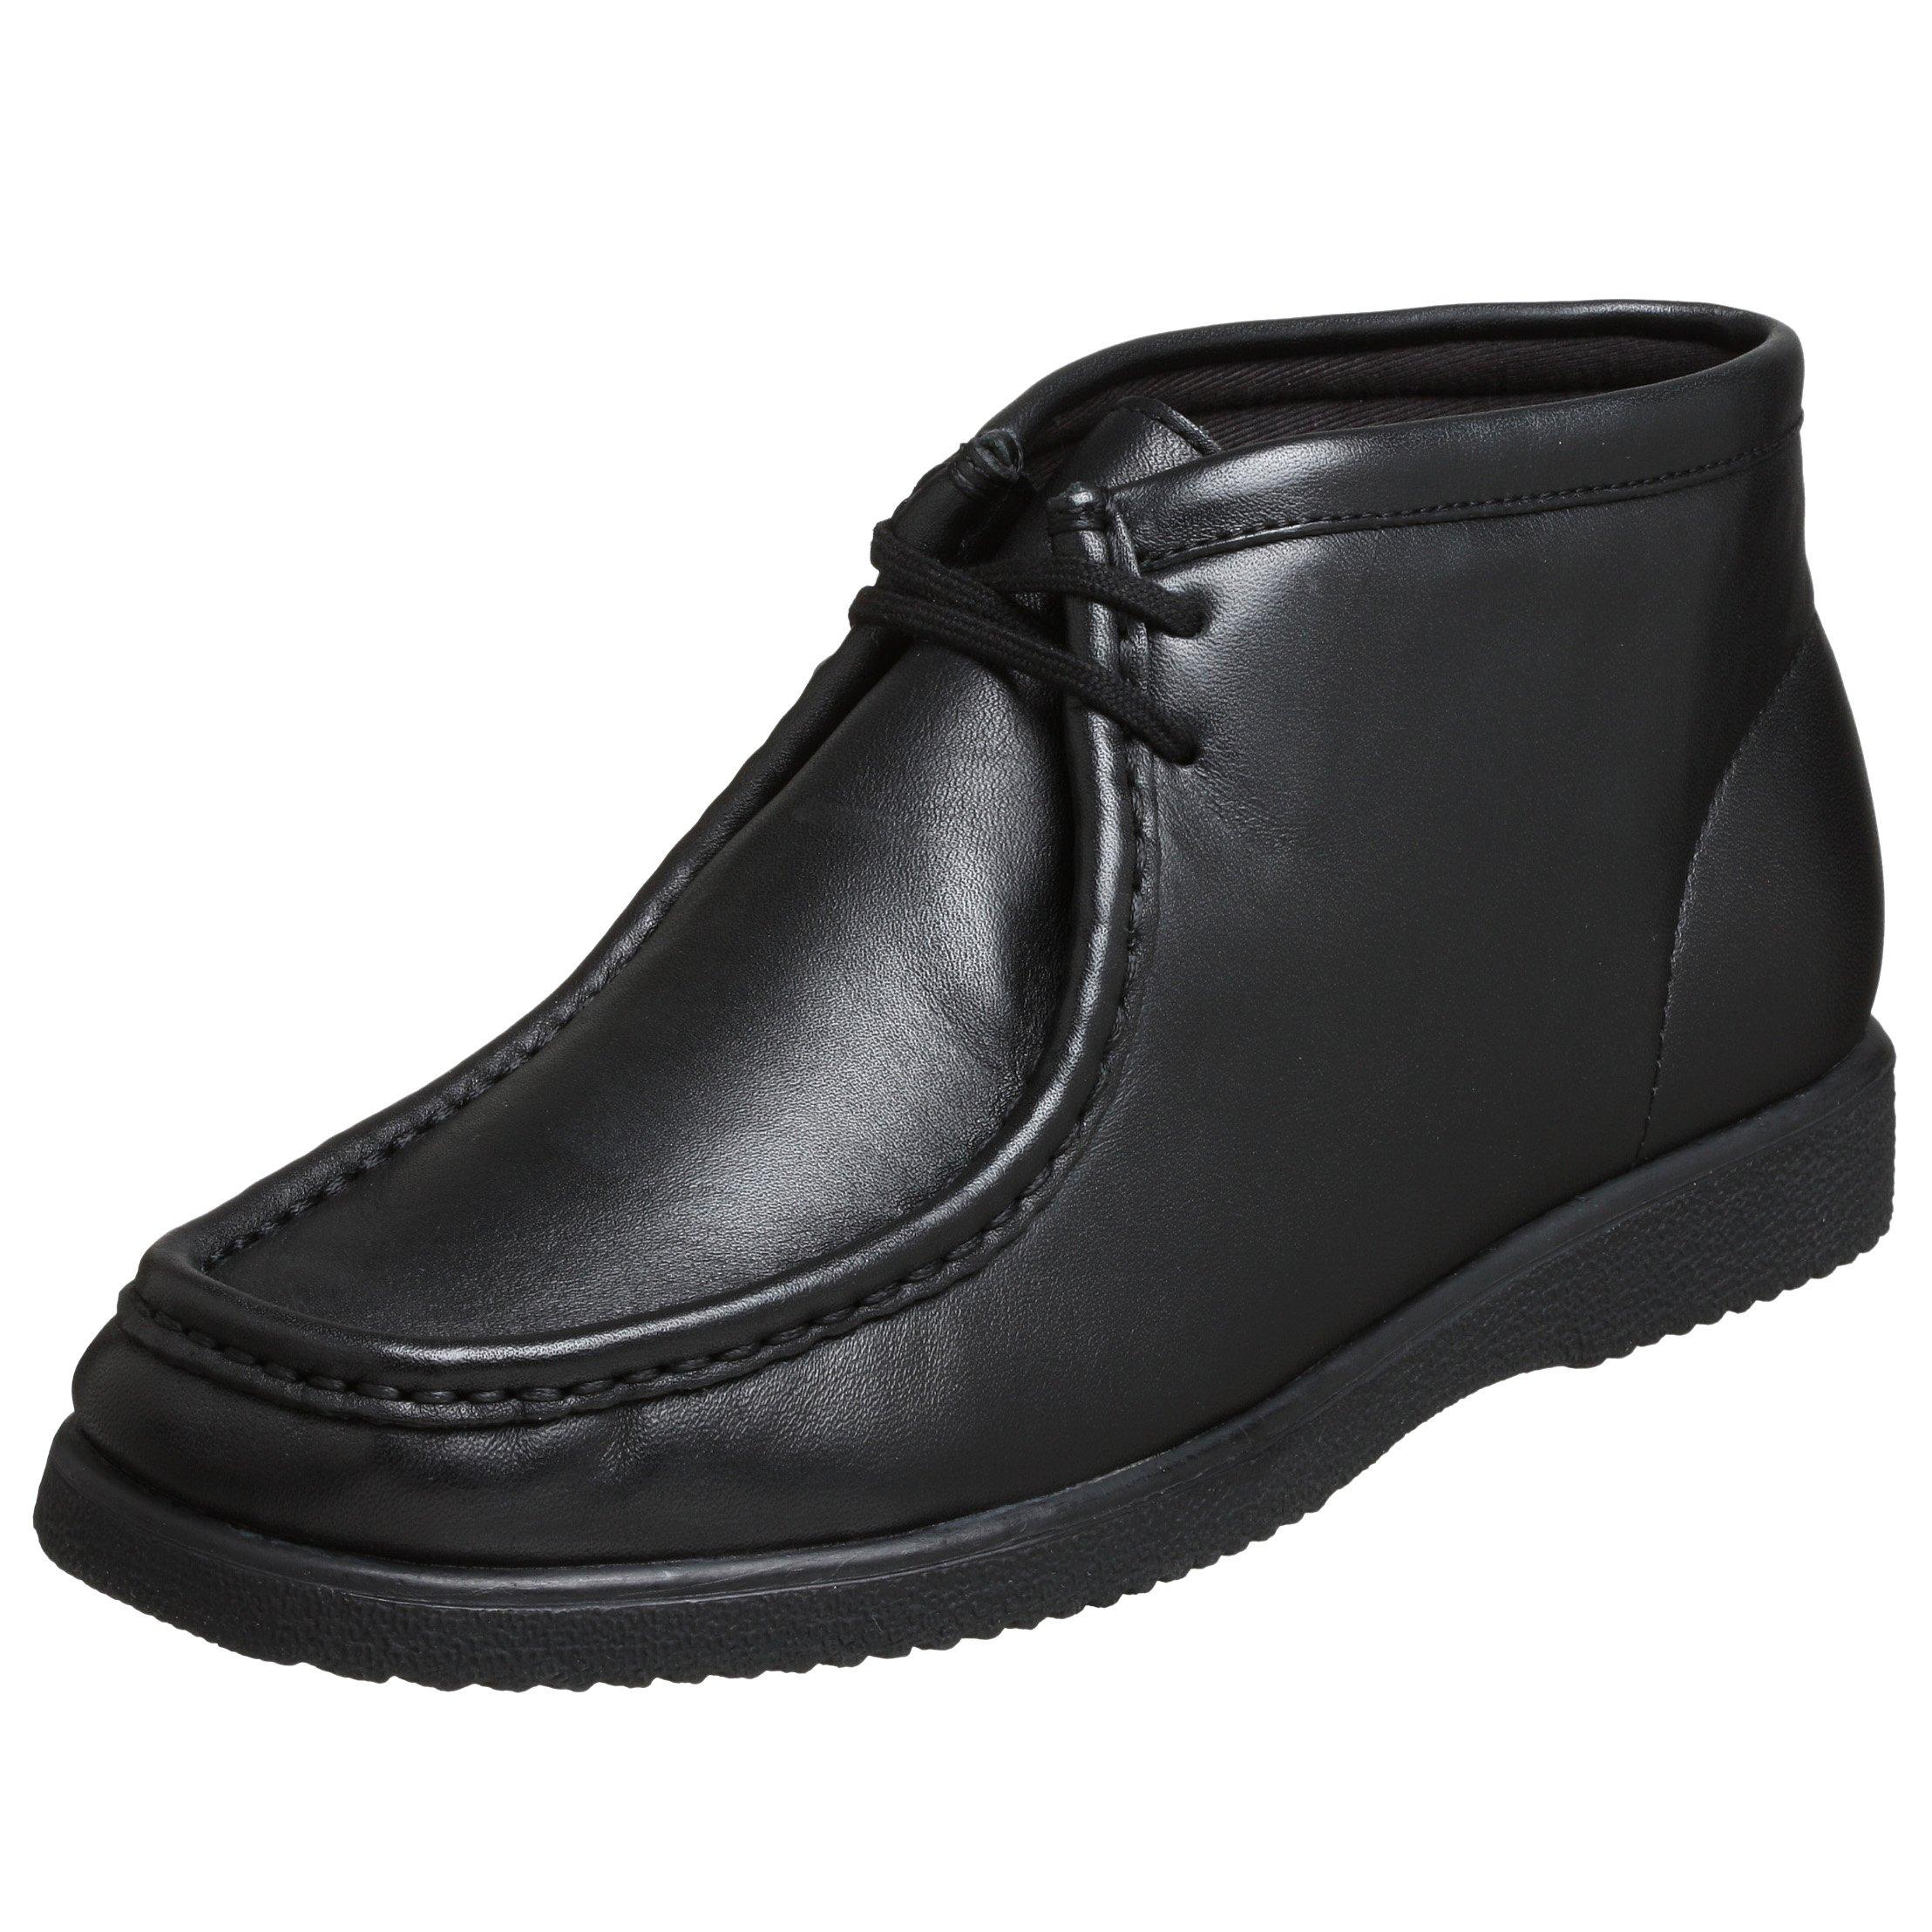 Hush Puppies Suede Bridgeport Boot,black Leather,13 M Us for Men | Lyst